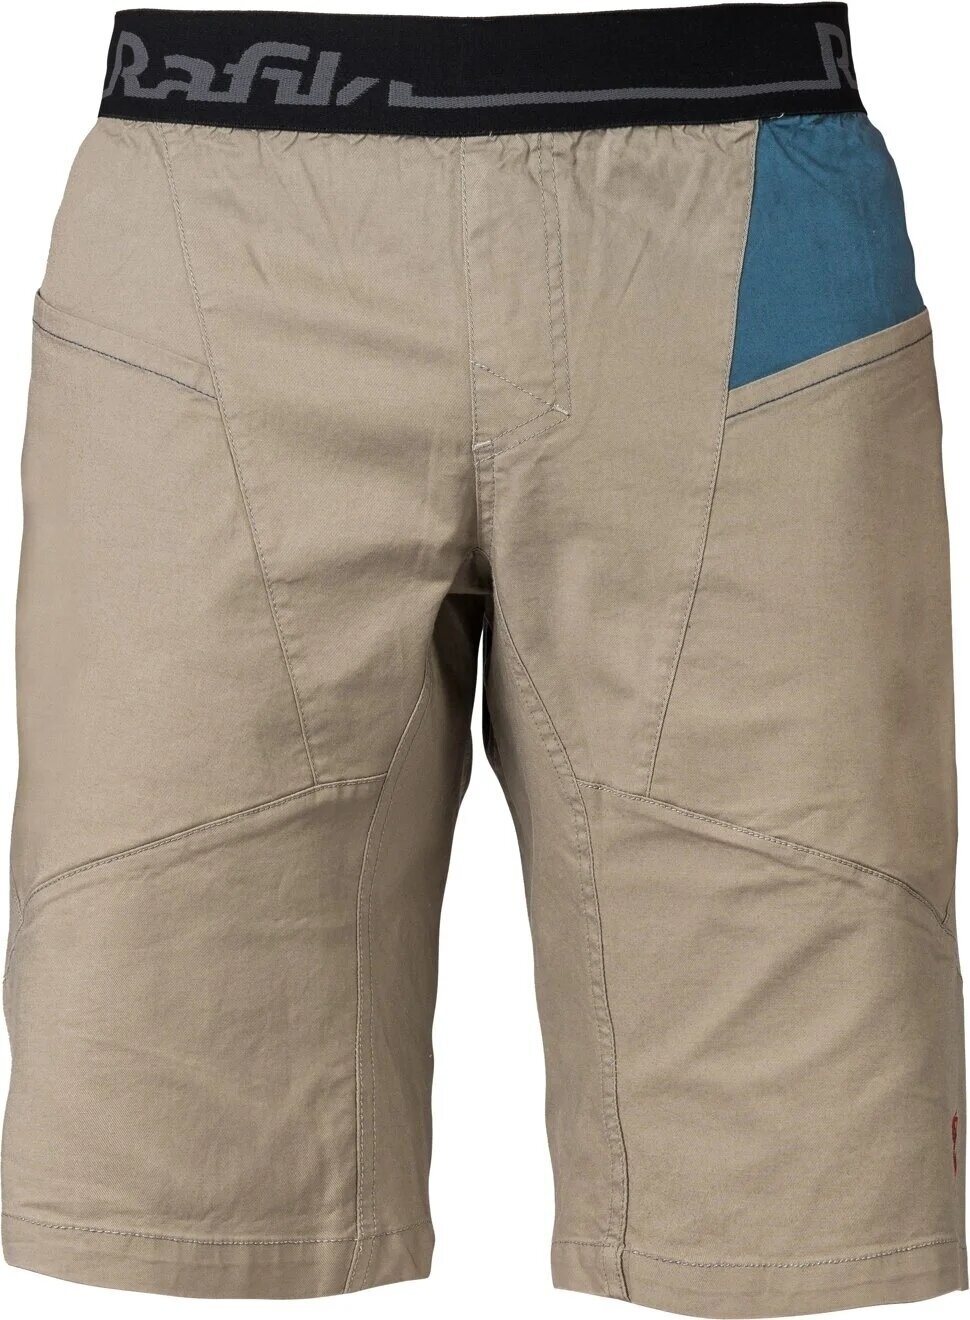 Outdoor Shorts Rafiki Megos Man Shorts Brindle/Stargazer XL Outdoor Shorts